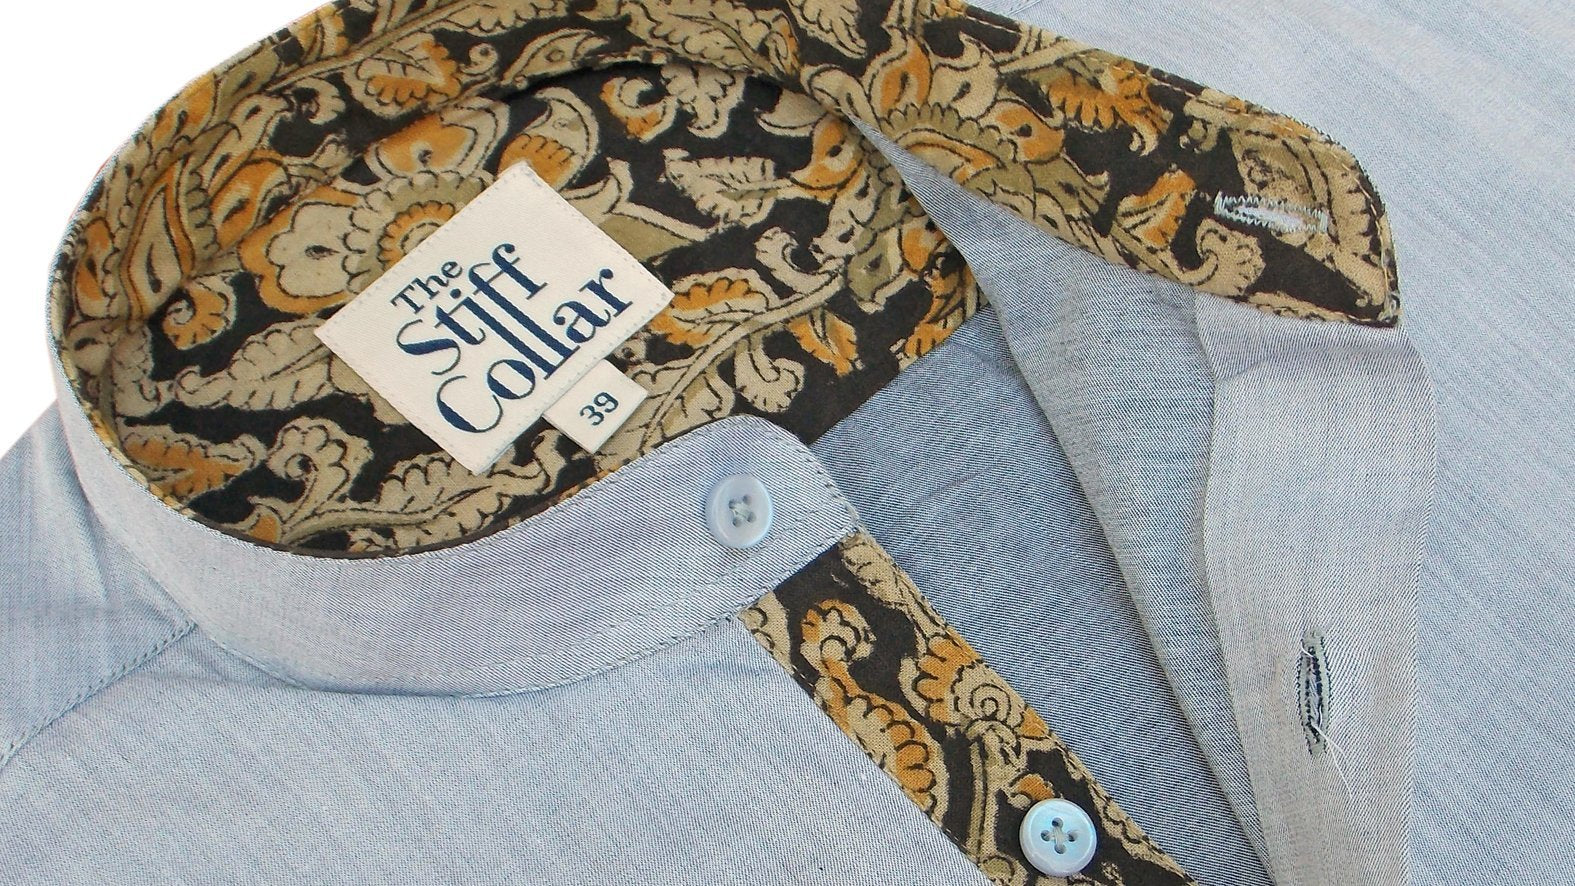 Clothing - Designer shirts from The Stiff Collar